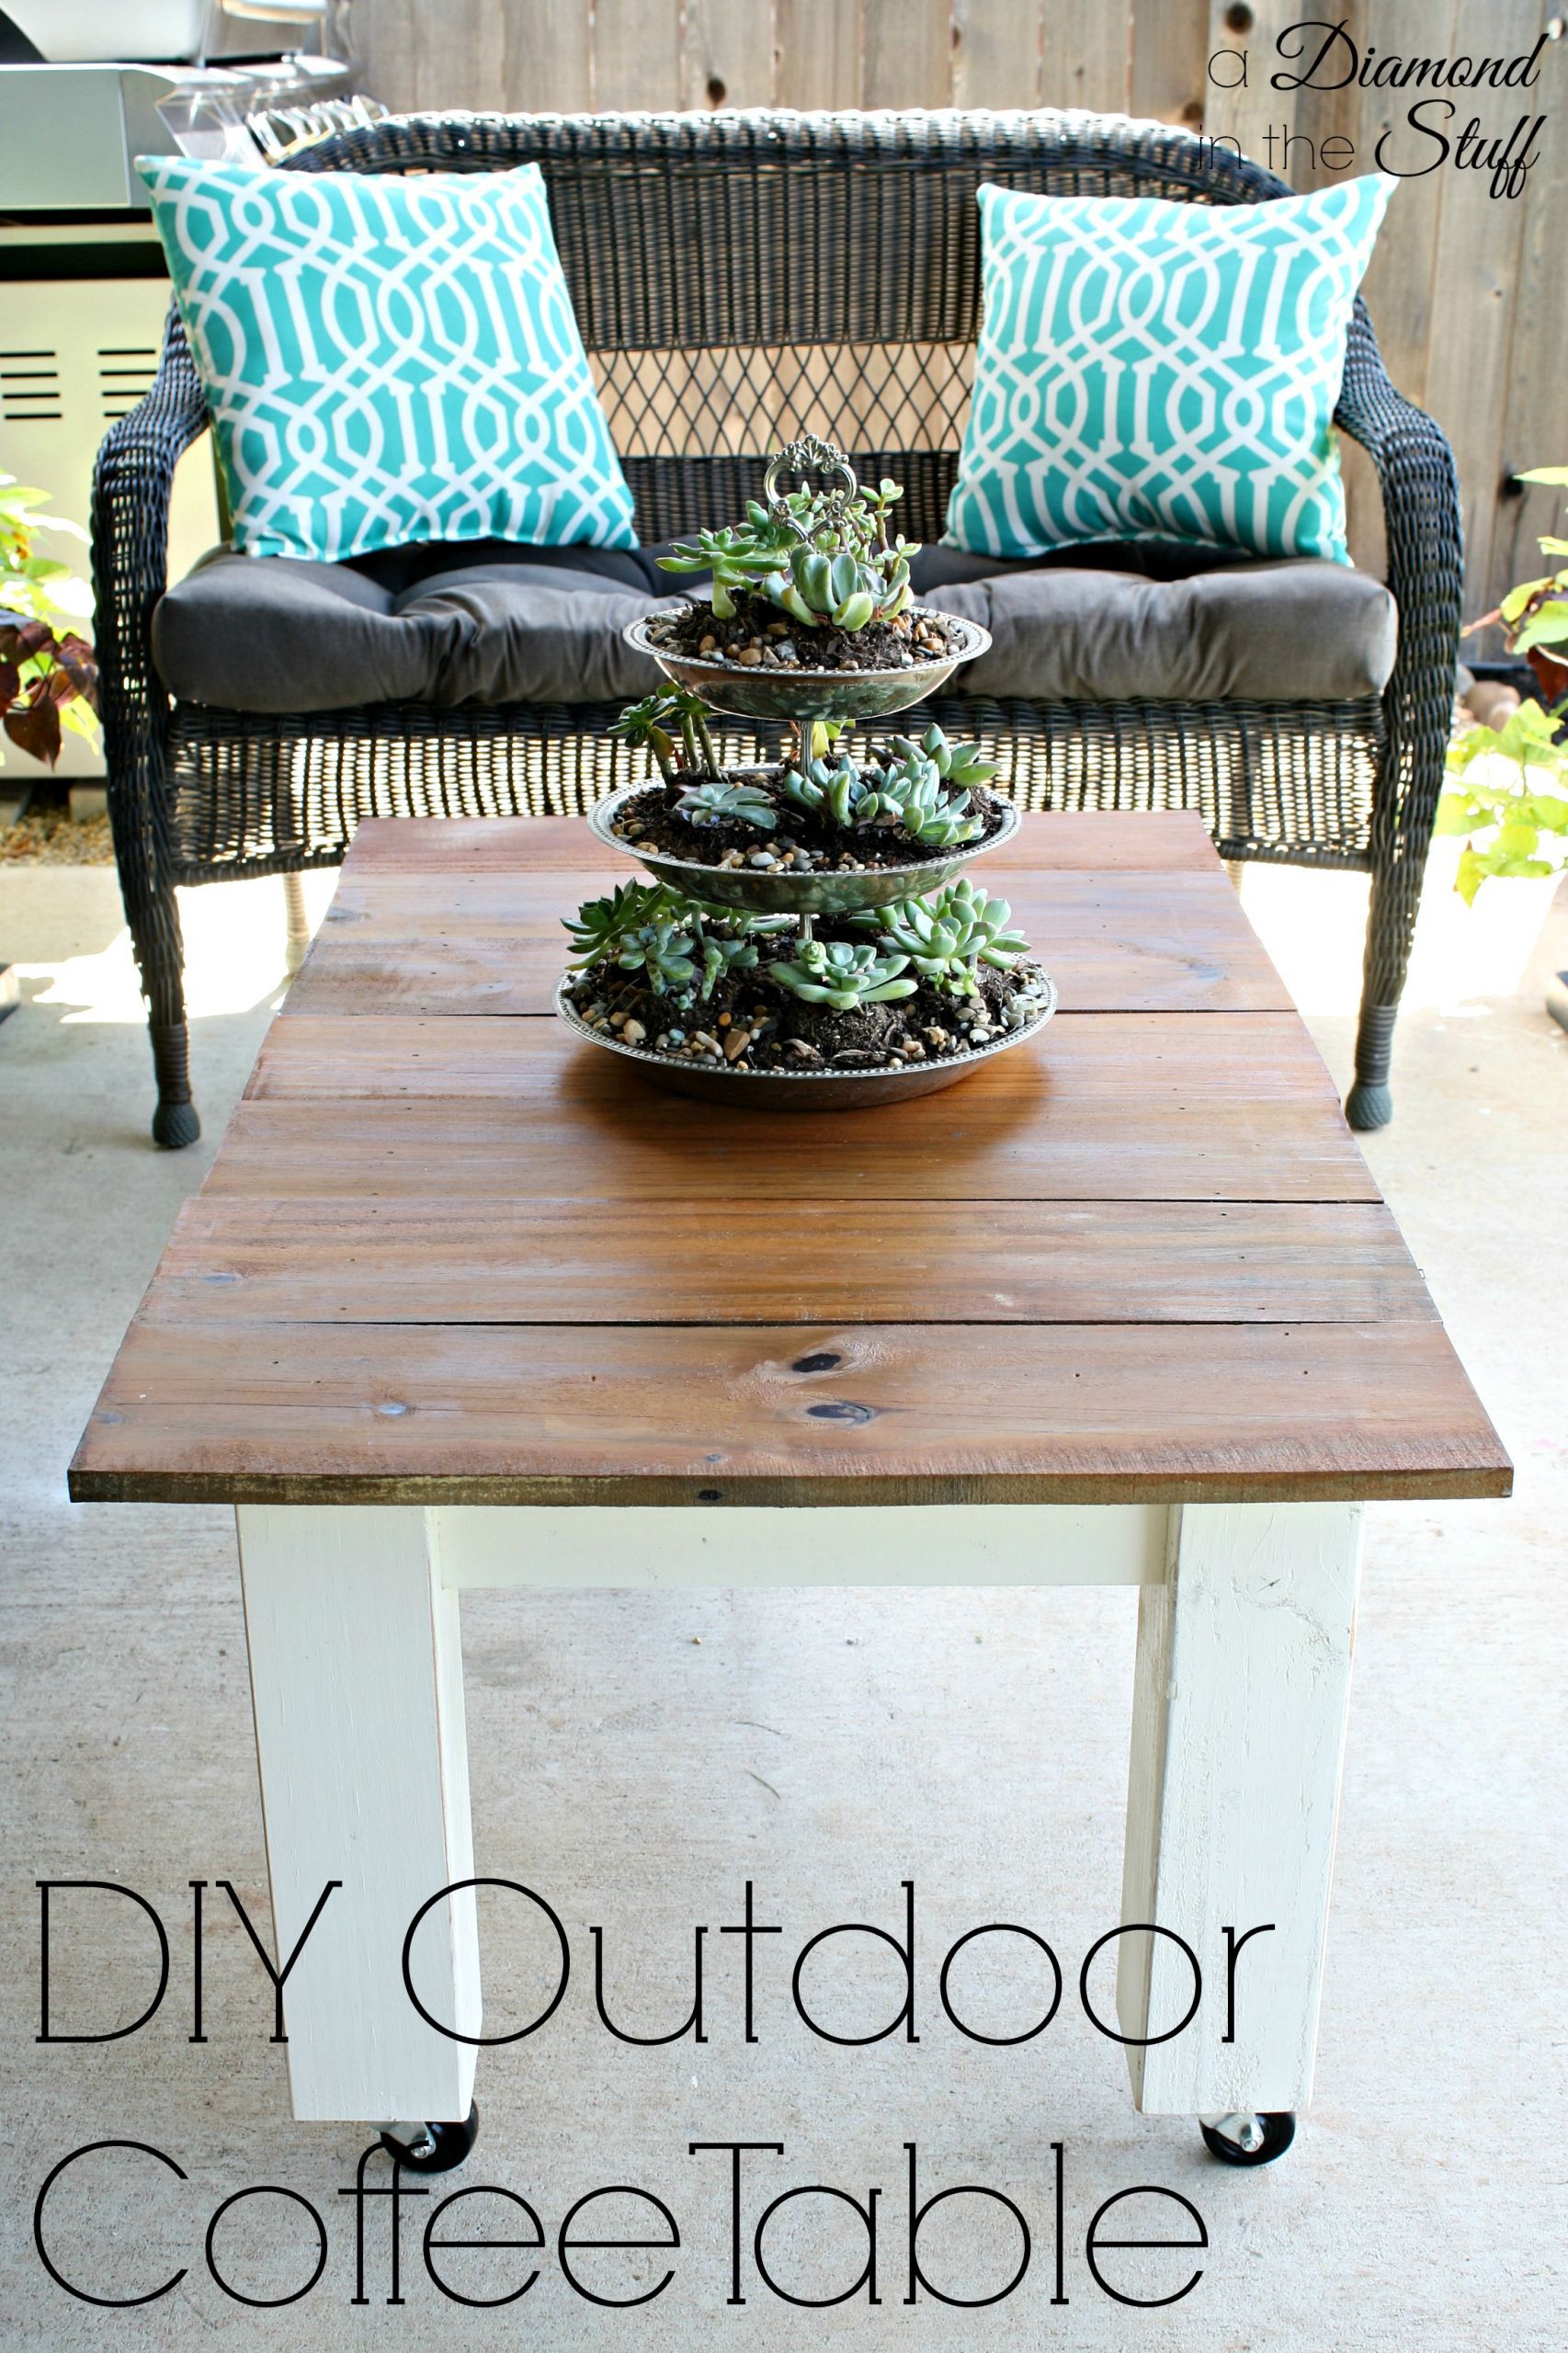 Outdoor Table DIY
 DIY Outdoor Coffee Table – A Diamond in the Stuff